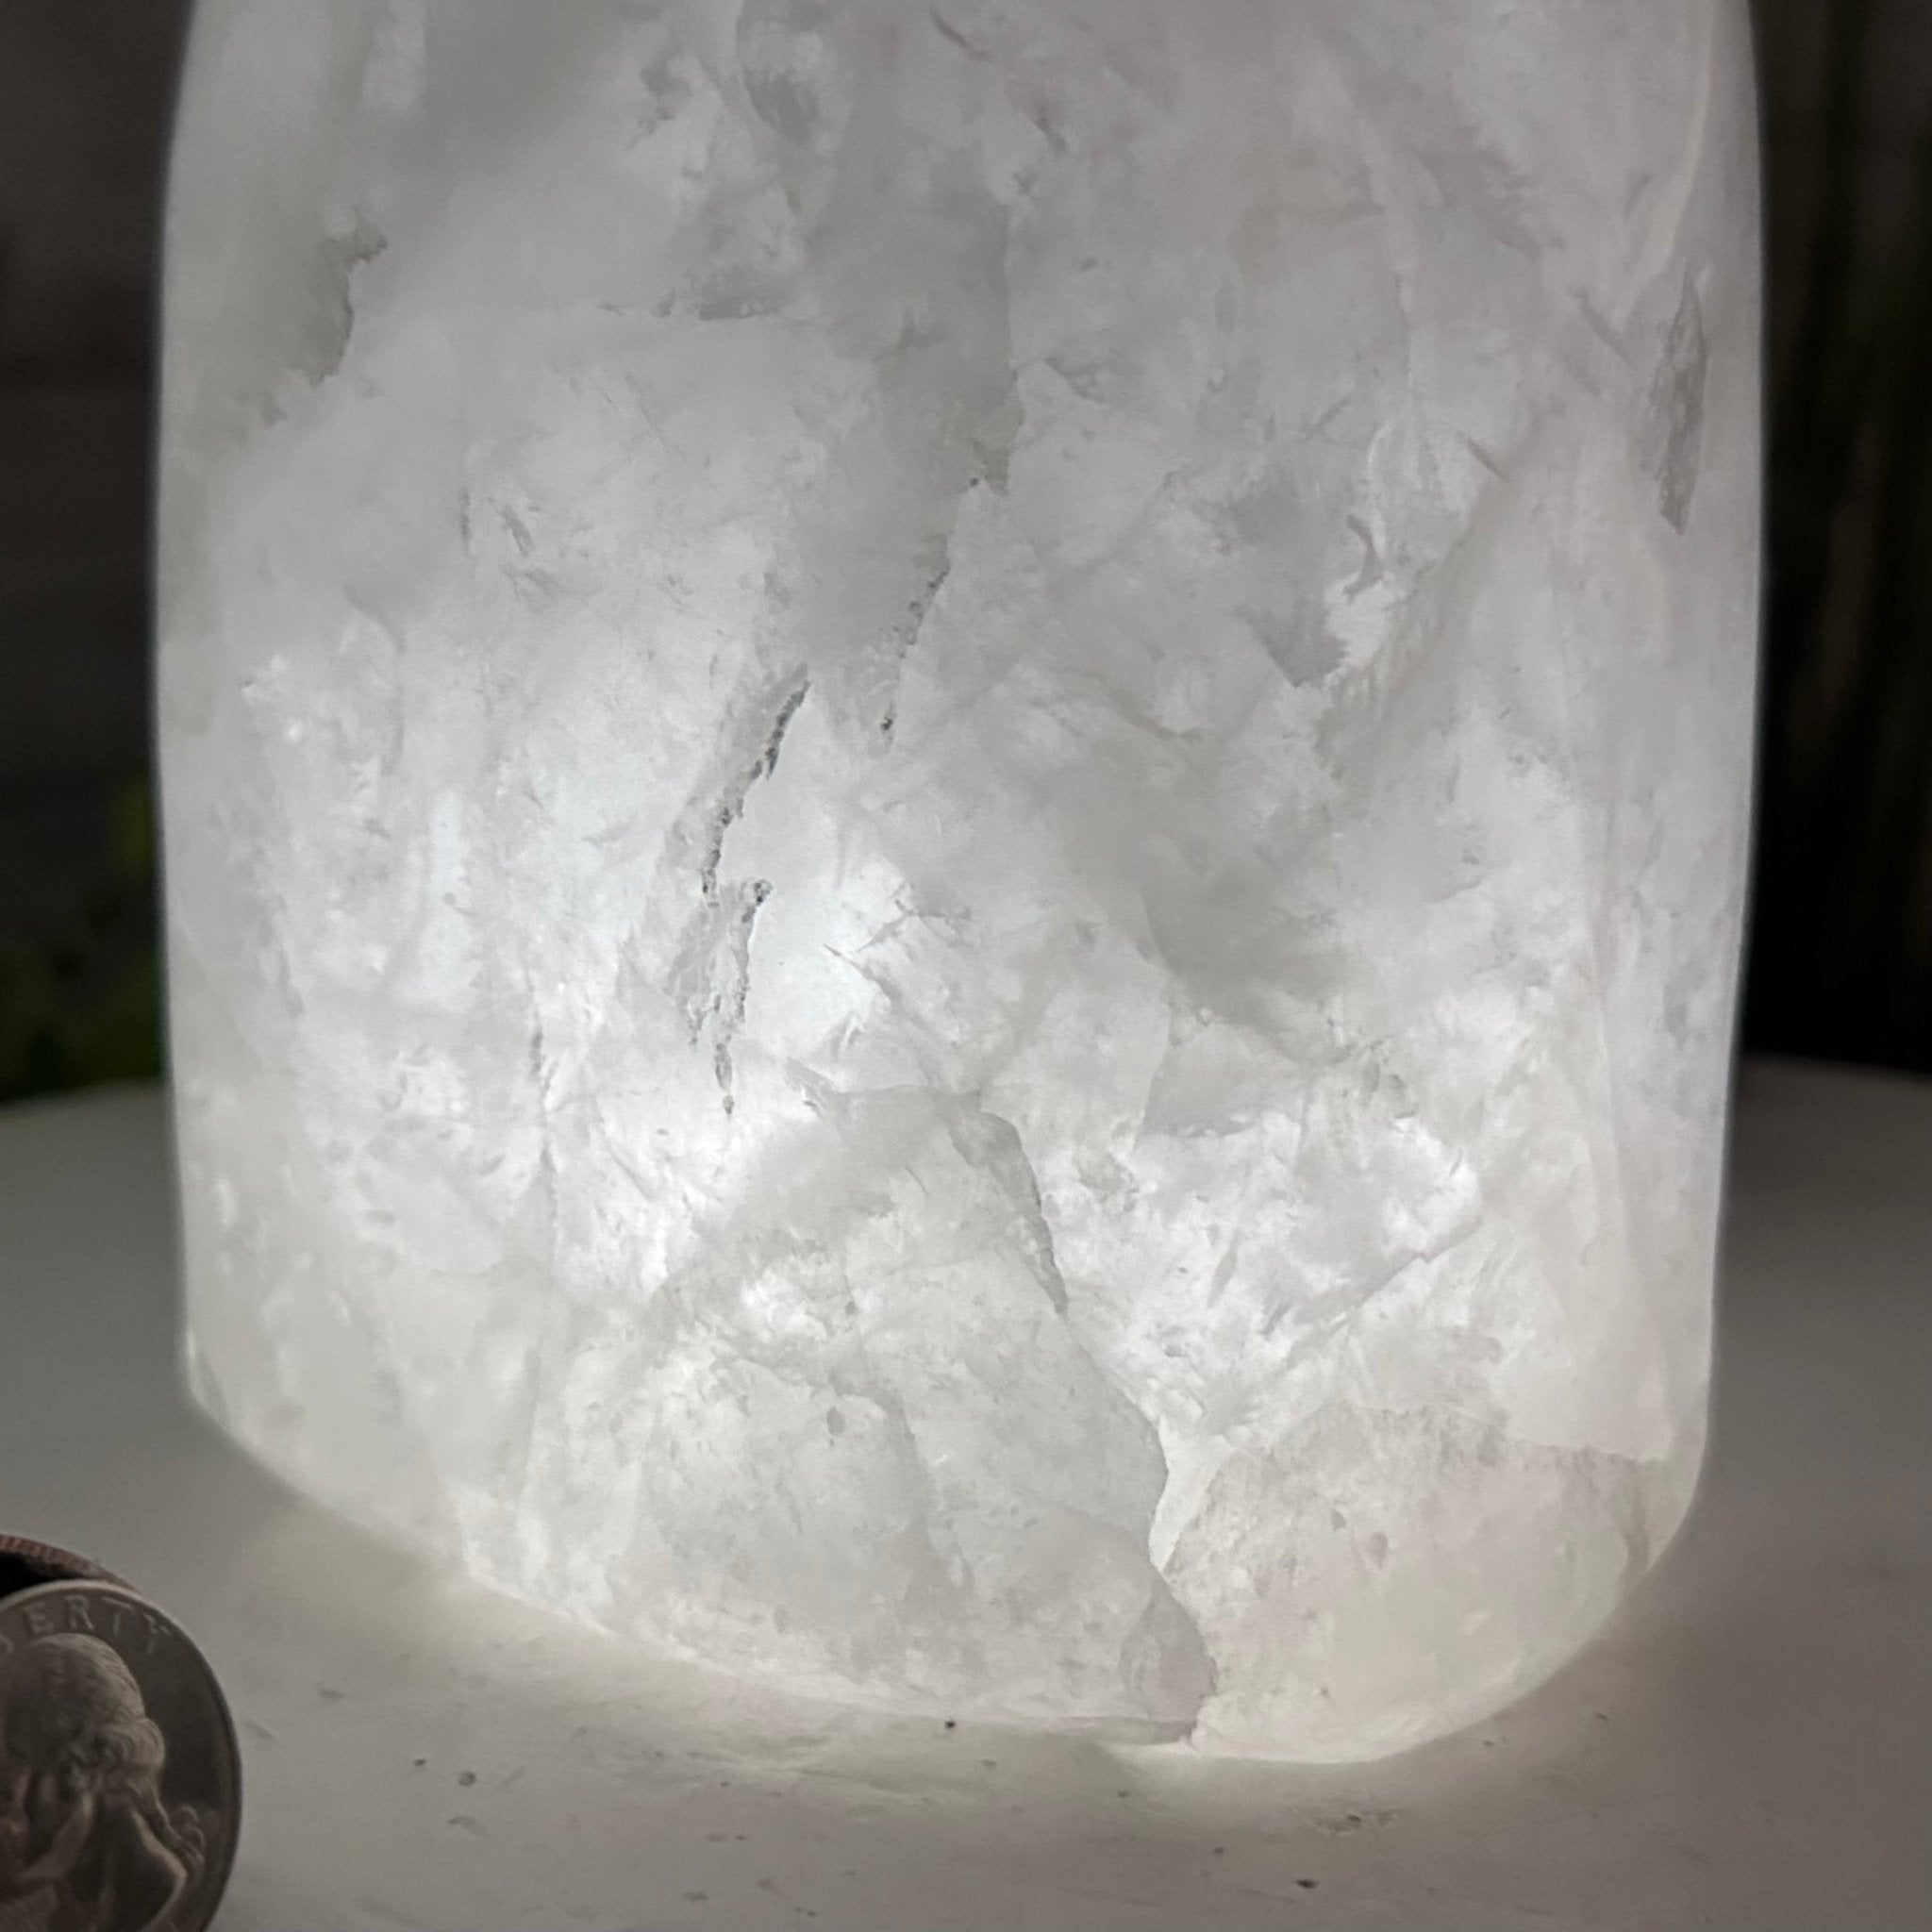 Polished Milky Quartz Crystal Night Light, 8.5 lbs & 7.4" Tall #5801MQ-004 - Brazil GemsBrazil GemsPolished Milky Quartz Crystal Night Light, 8.5 lbs & 7.4" Tall #5801MQ-004Night Lights5801MQ-004